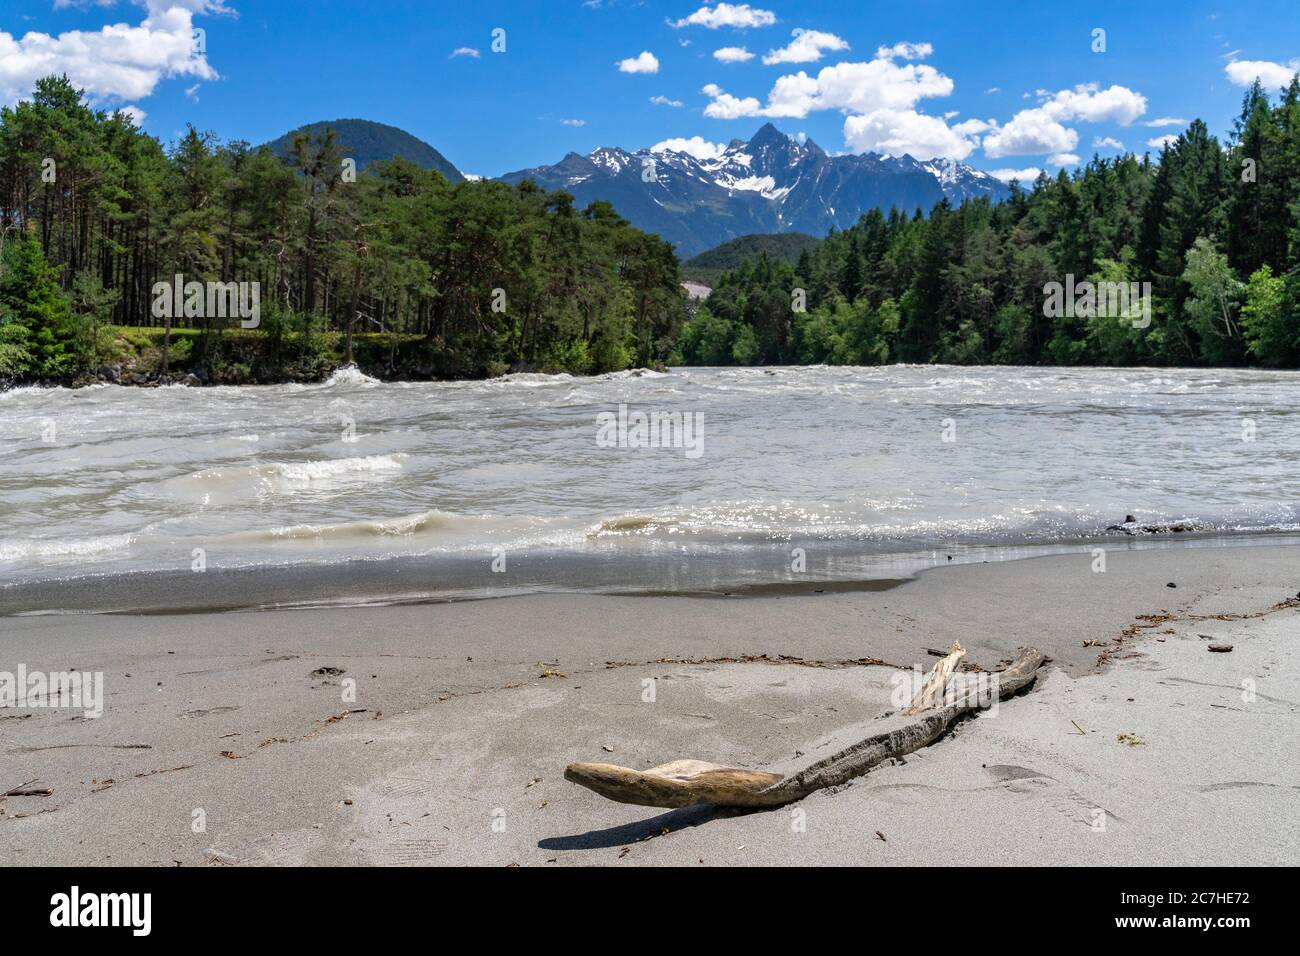 Europe, Austria, Tyrol, Ötztal Alps, Ötztal, deadwood on the sandy beach in the Innbucht Stock Photo